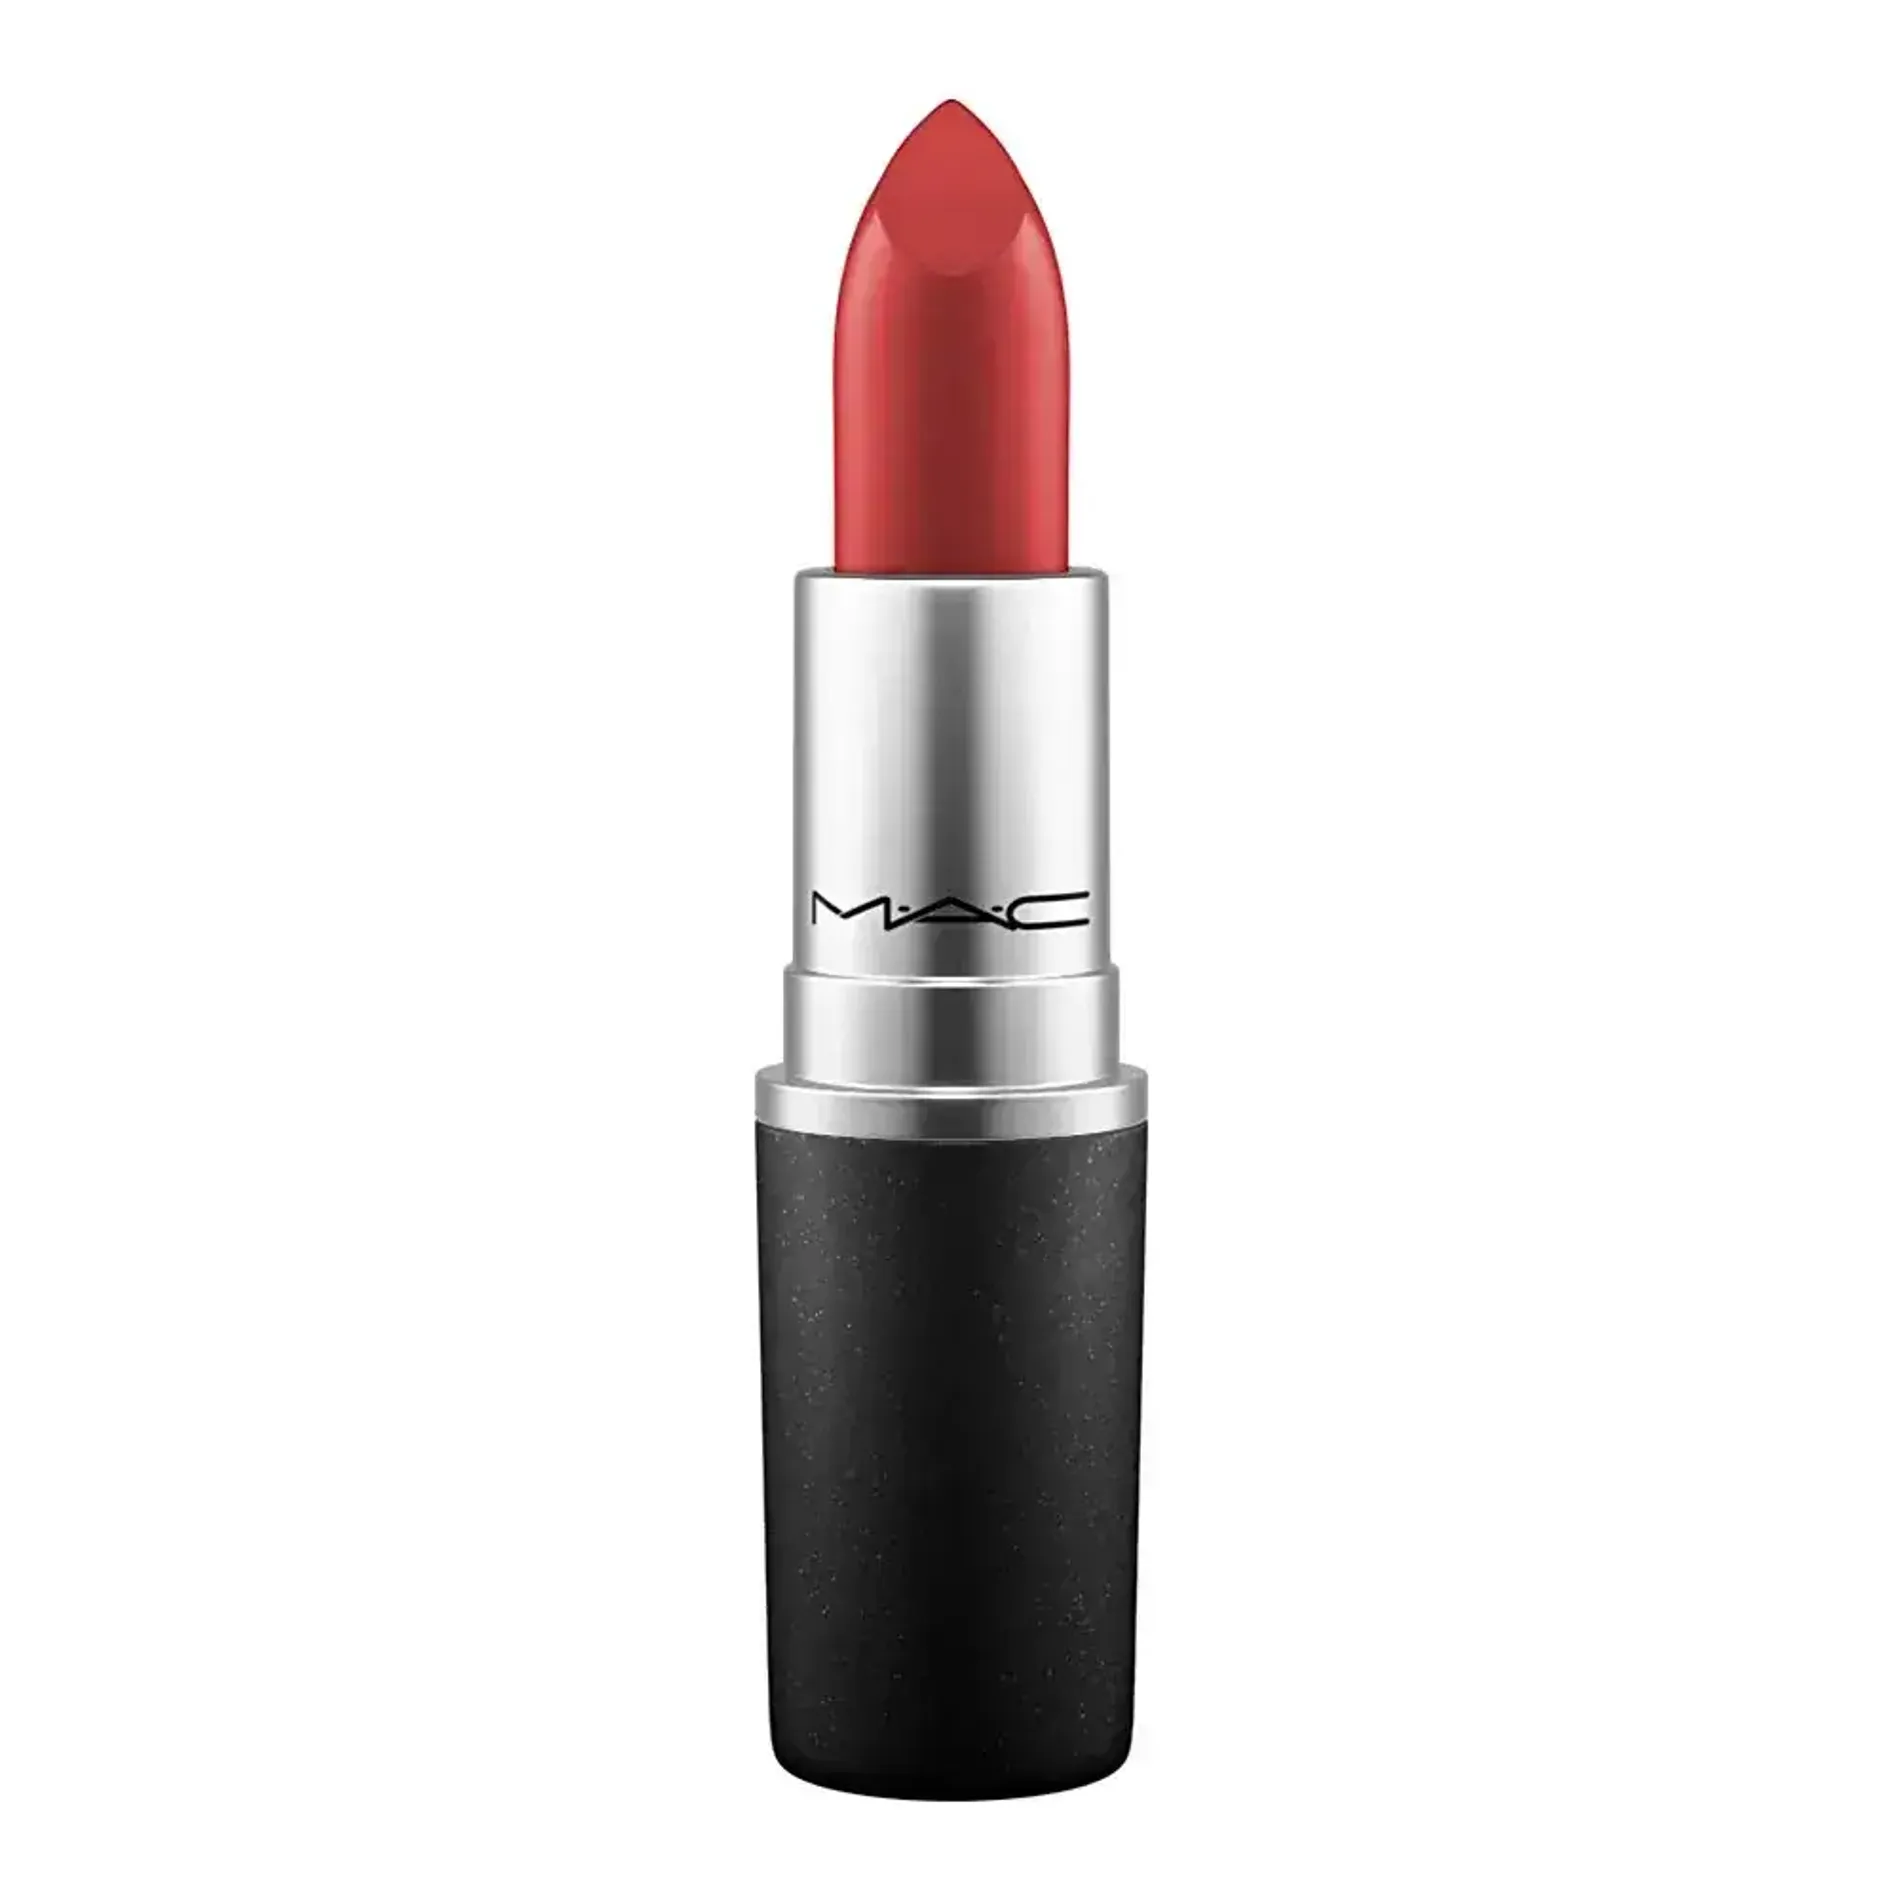 son-thoi-mac-amplified-creme-lipstick-3g-3